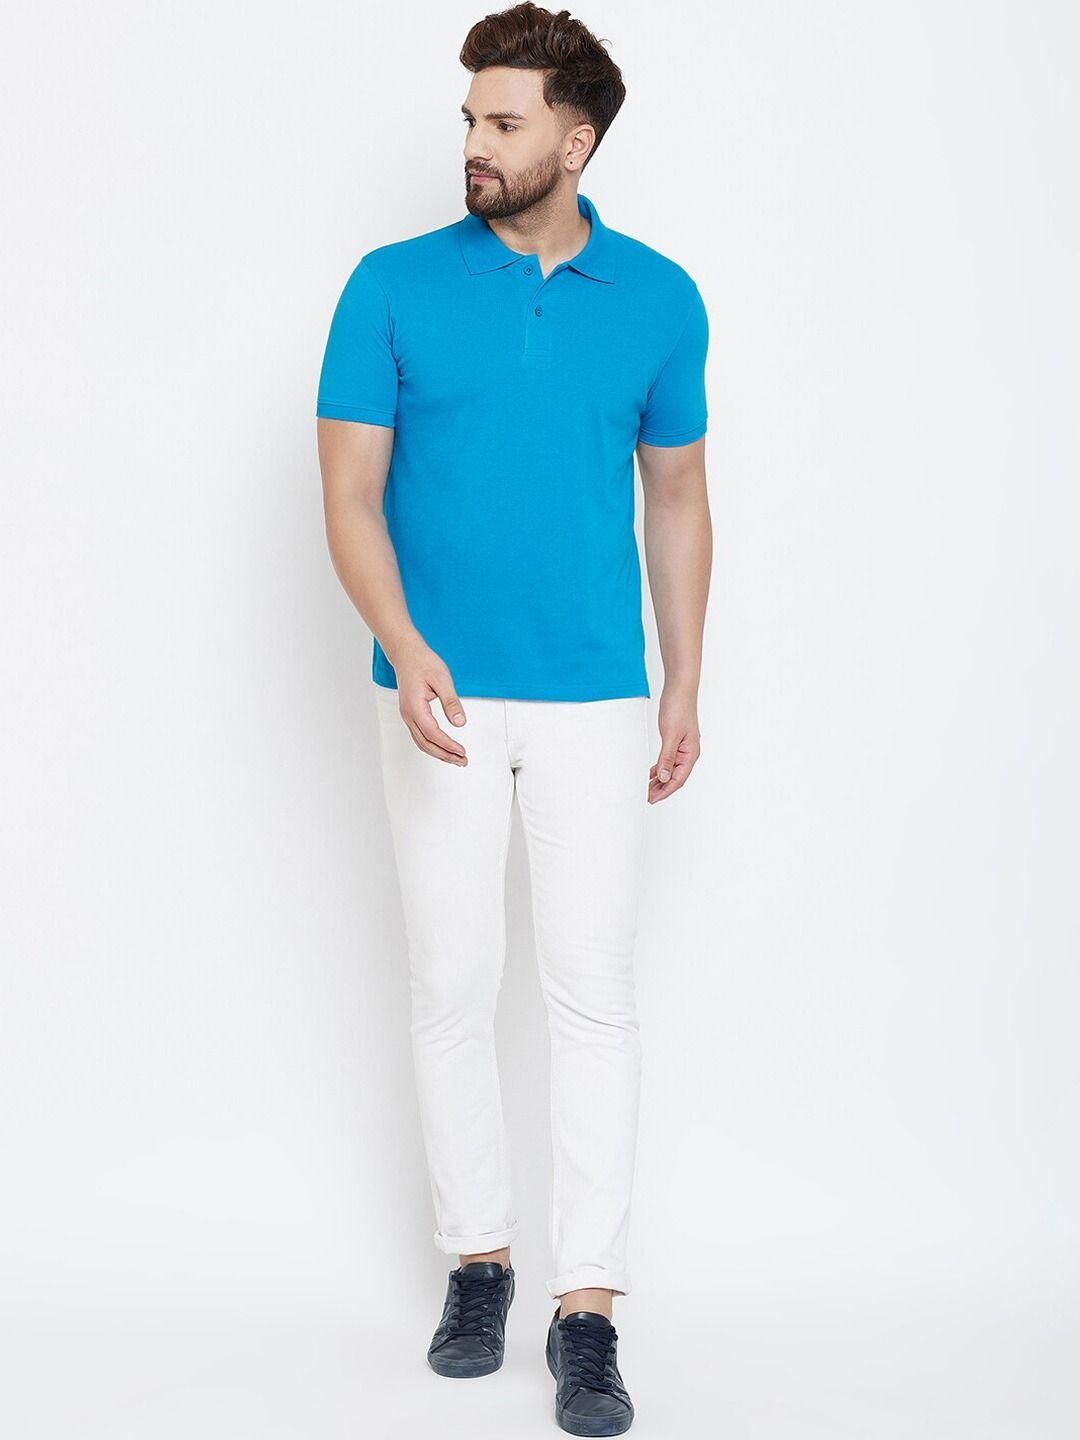 Men's Cotton Blend Half-Sleeve Polo T-Shirt - Solid Color